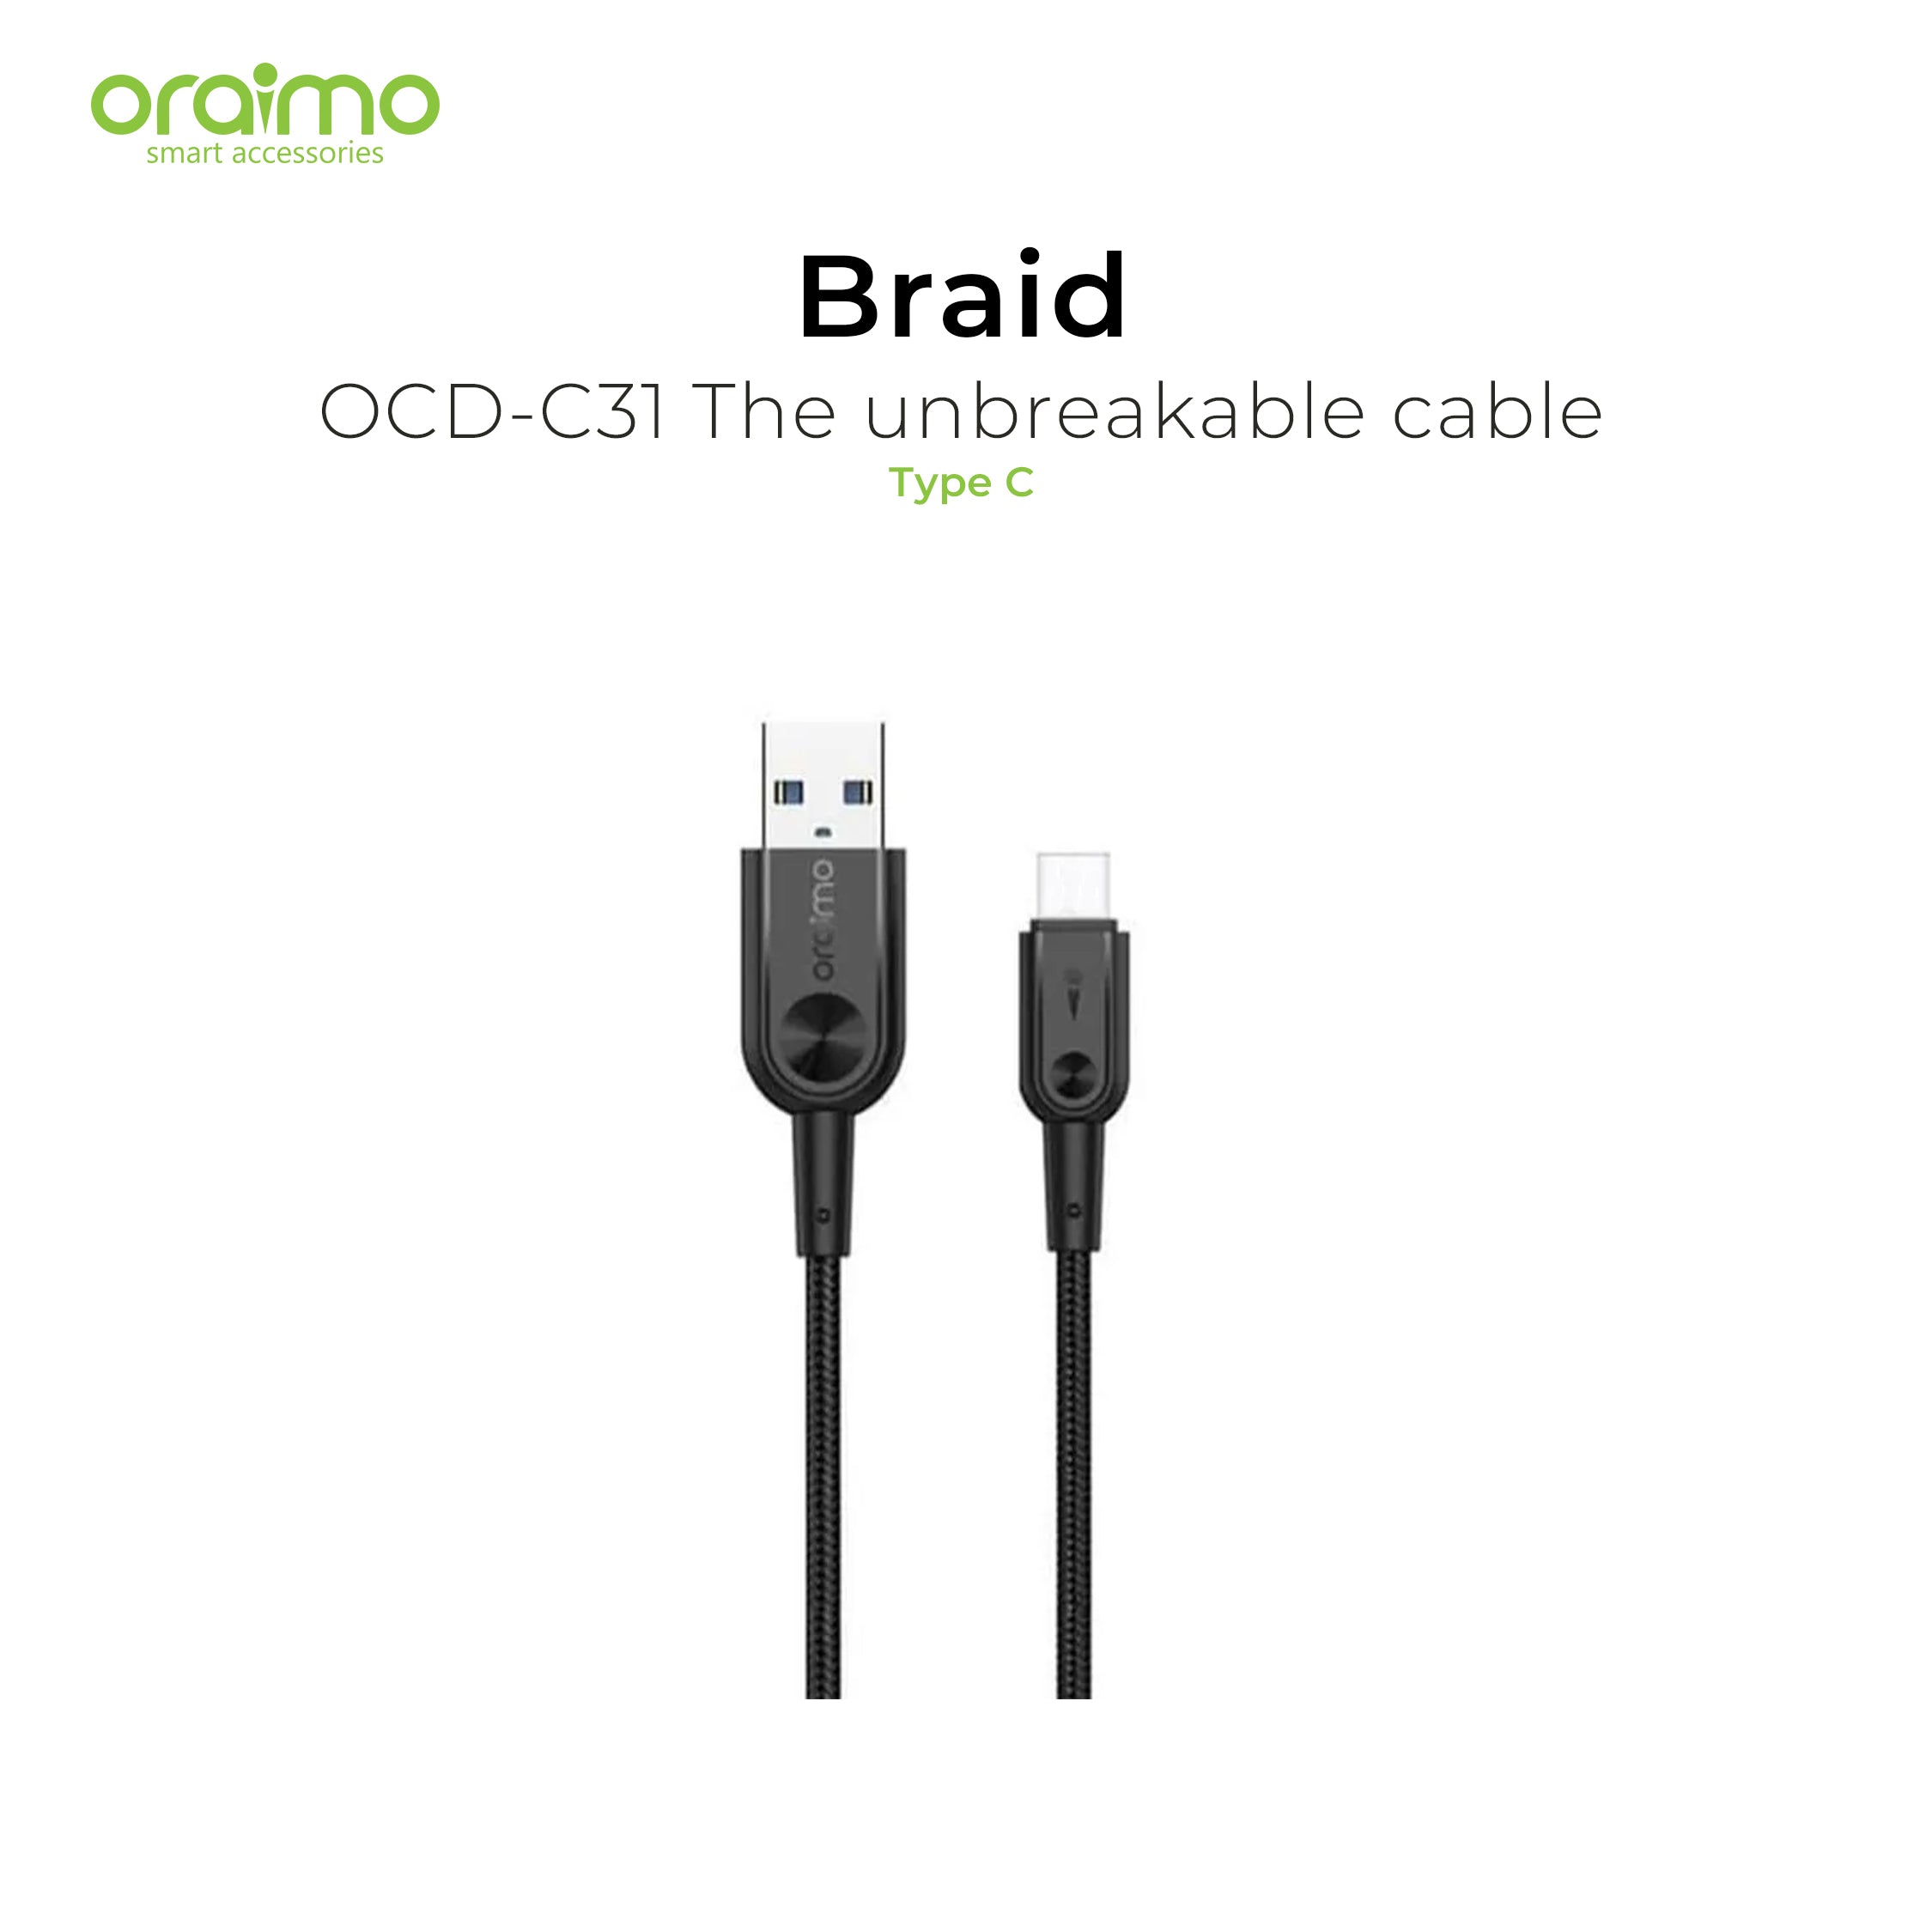 Oraimo Braid Tyoe C Cable OCD-C31